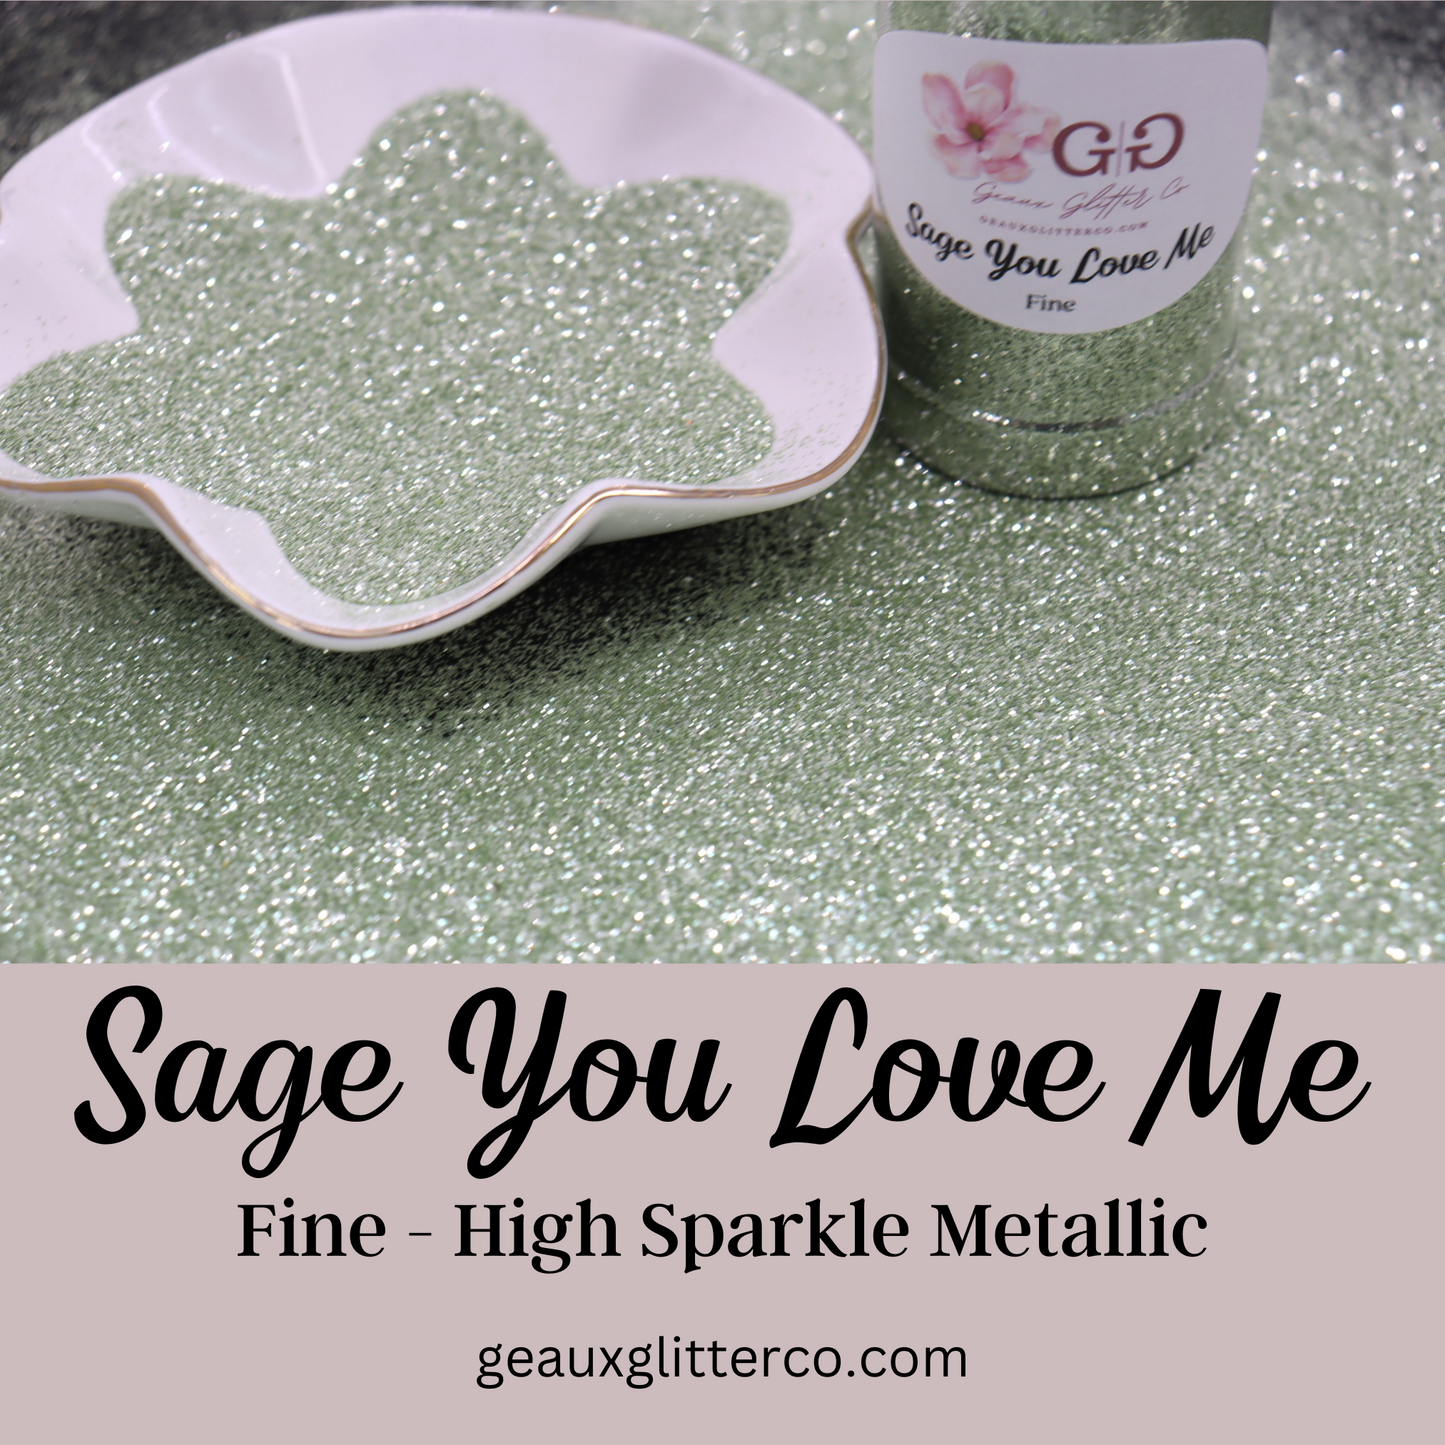 Sage You Love Me! Fine